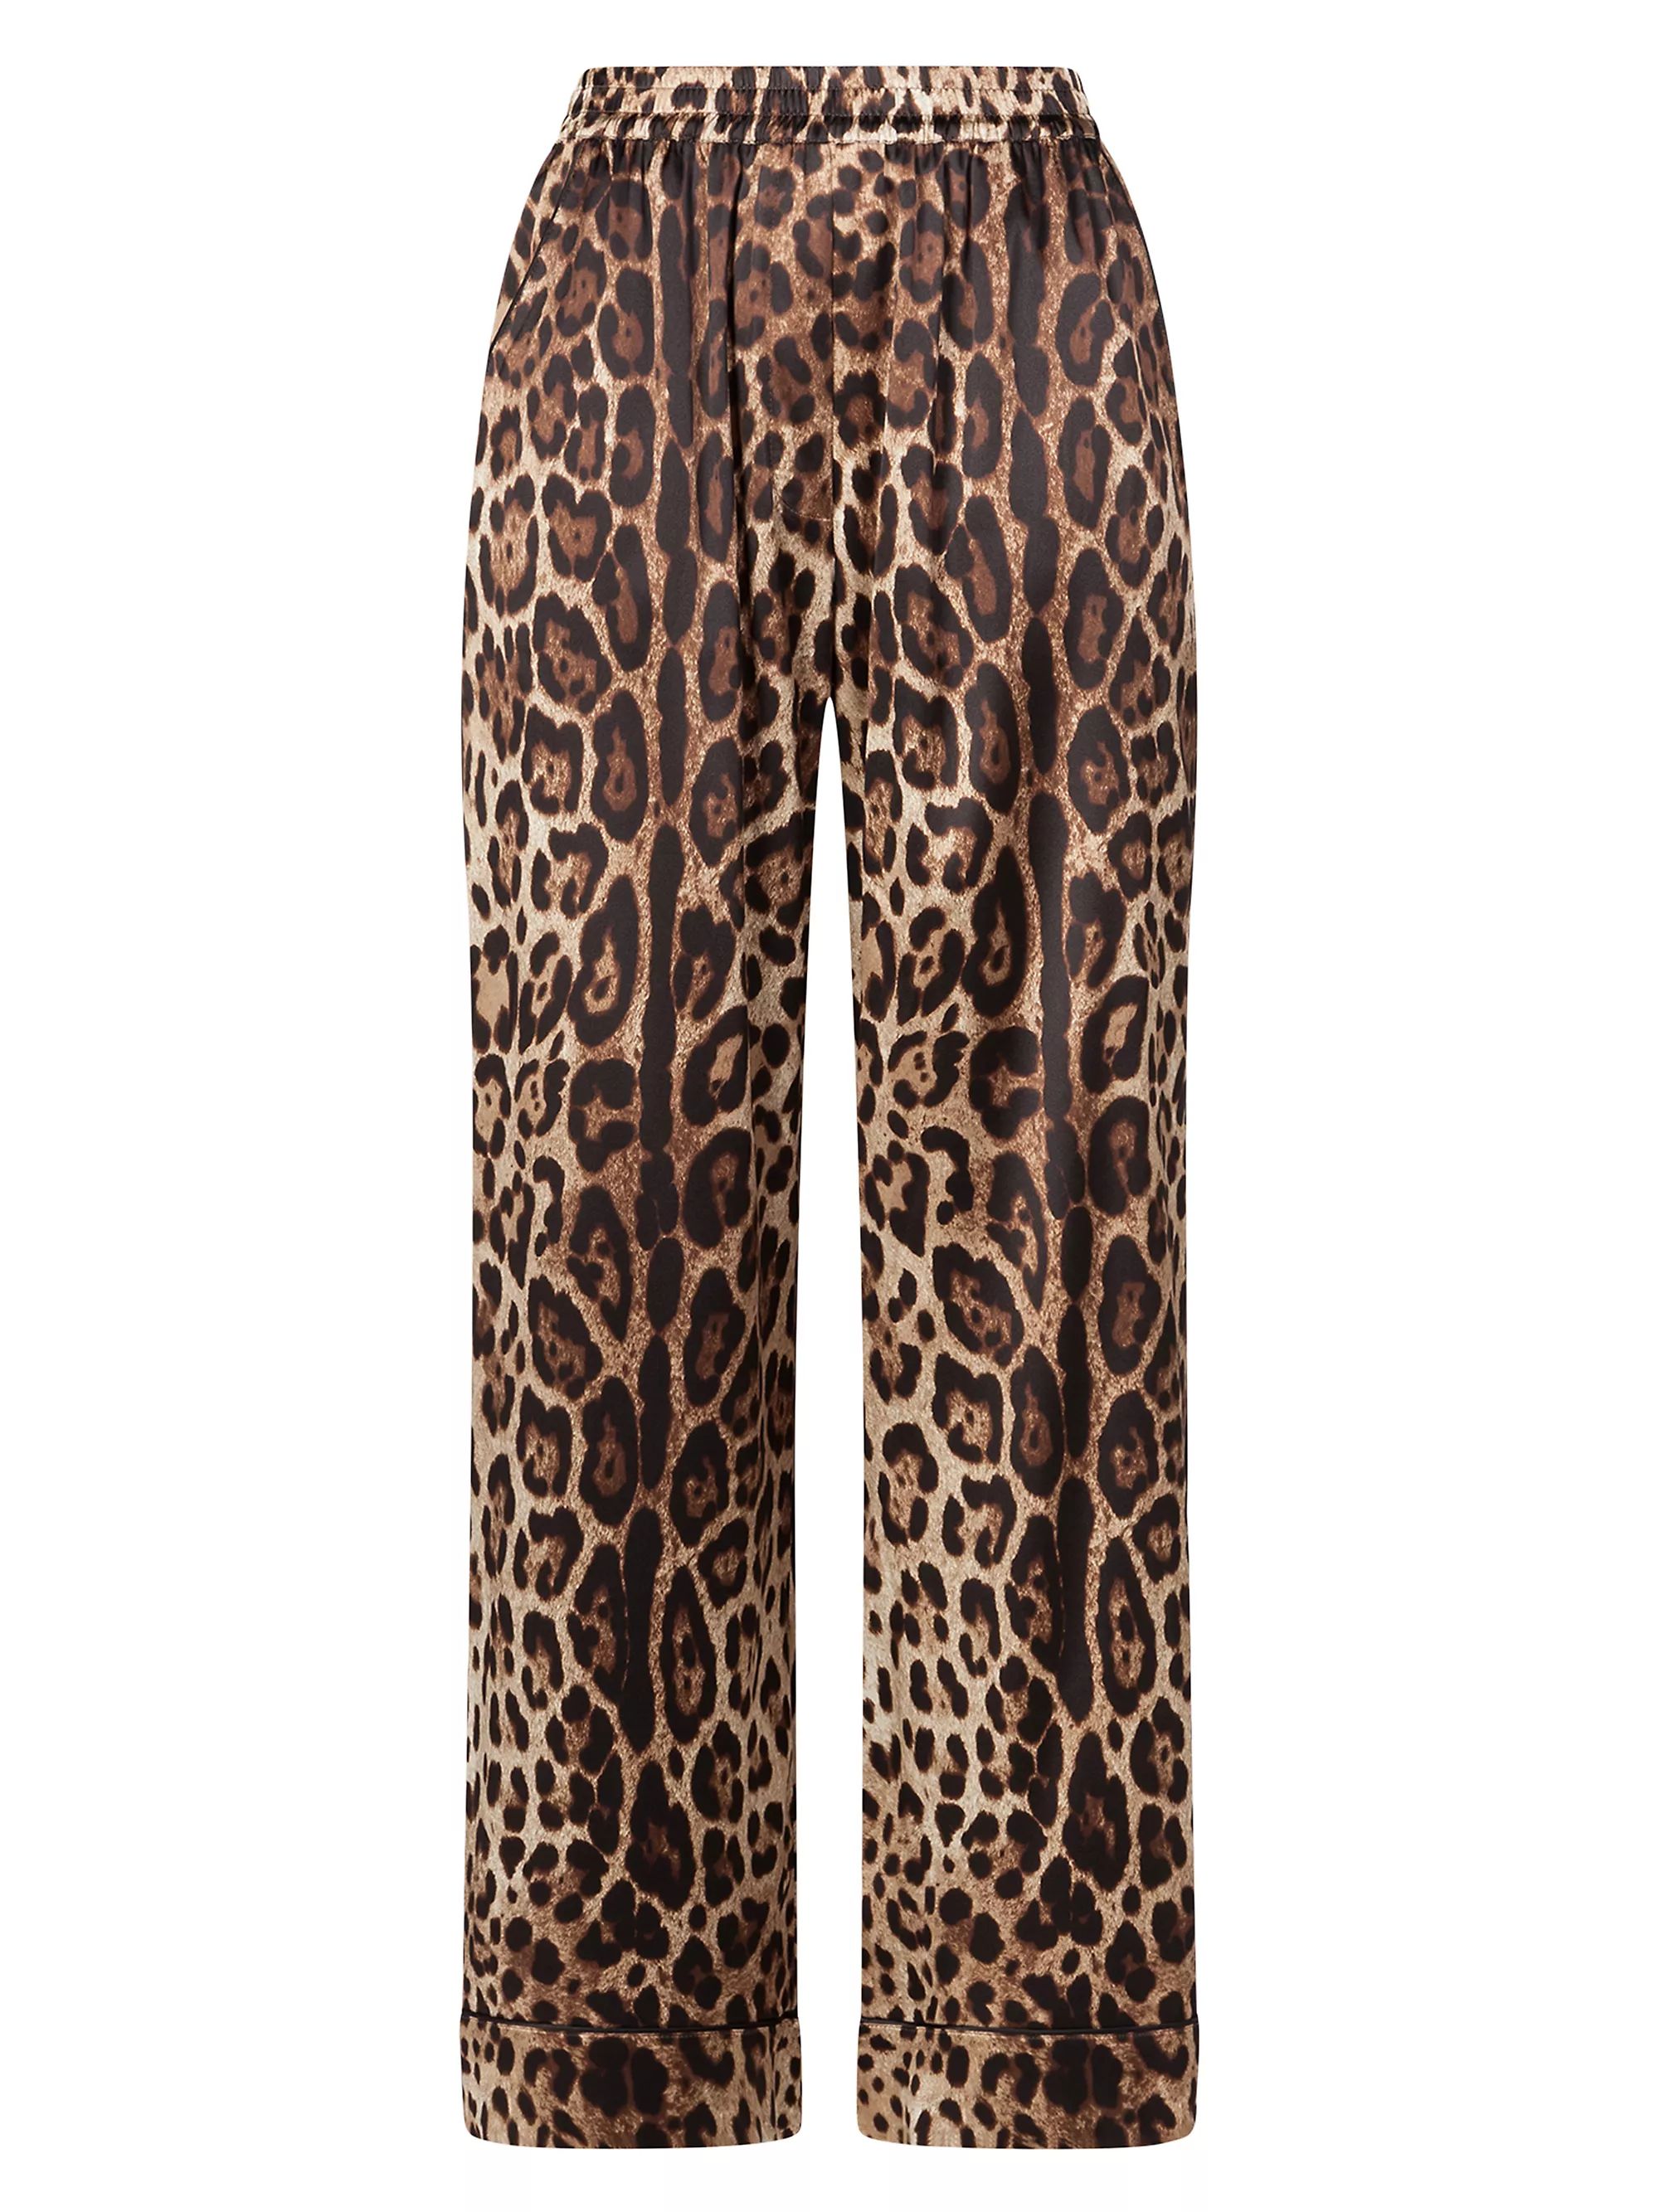 Leopard Printed Pants | Saks Fifth Avenue